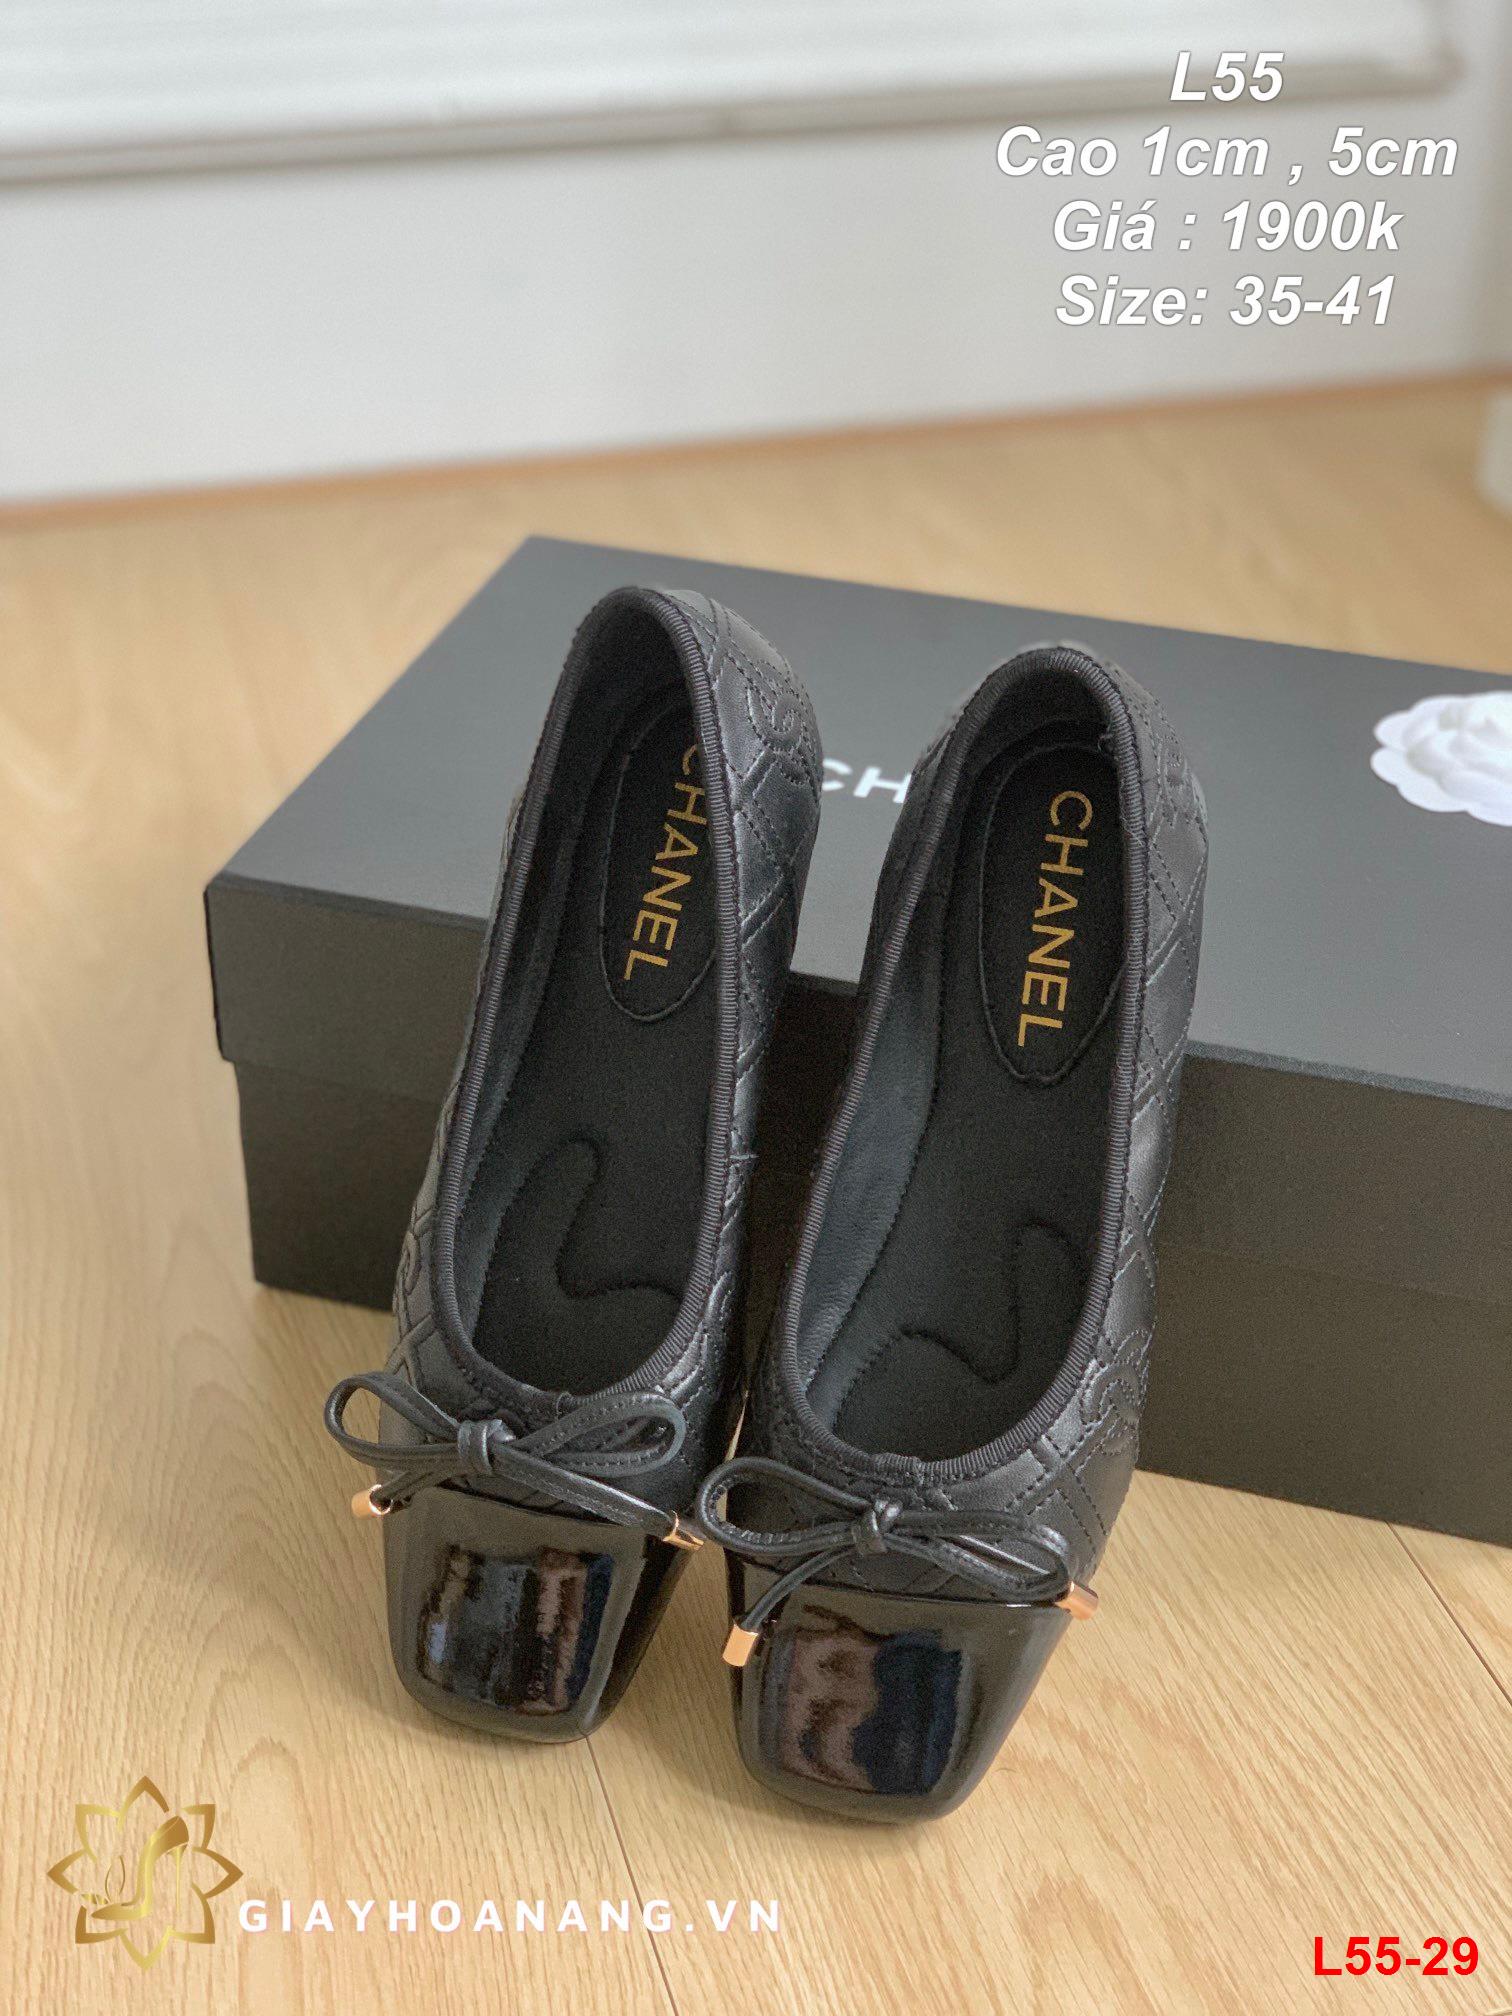 L55-29 Chanel giày cao 1cm , 5cm siêu cấp